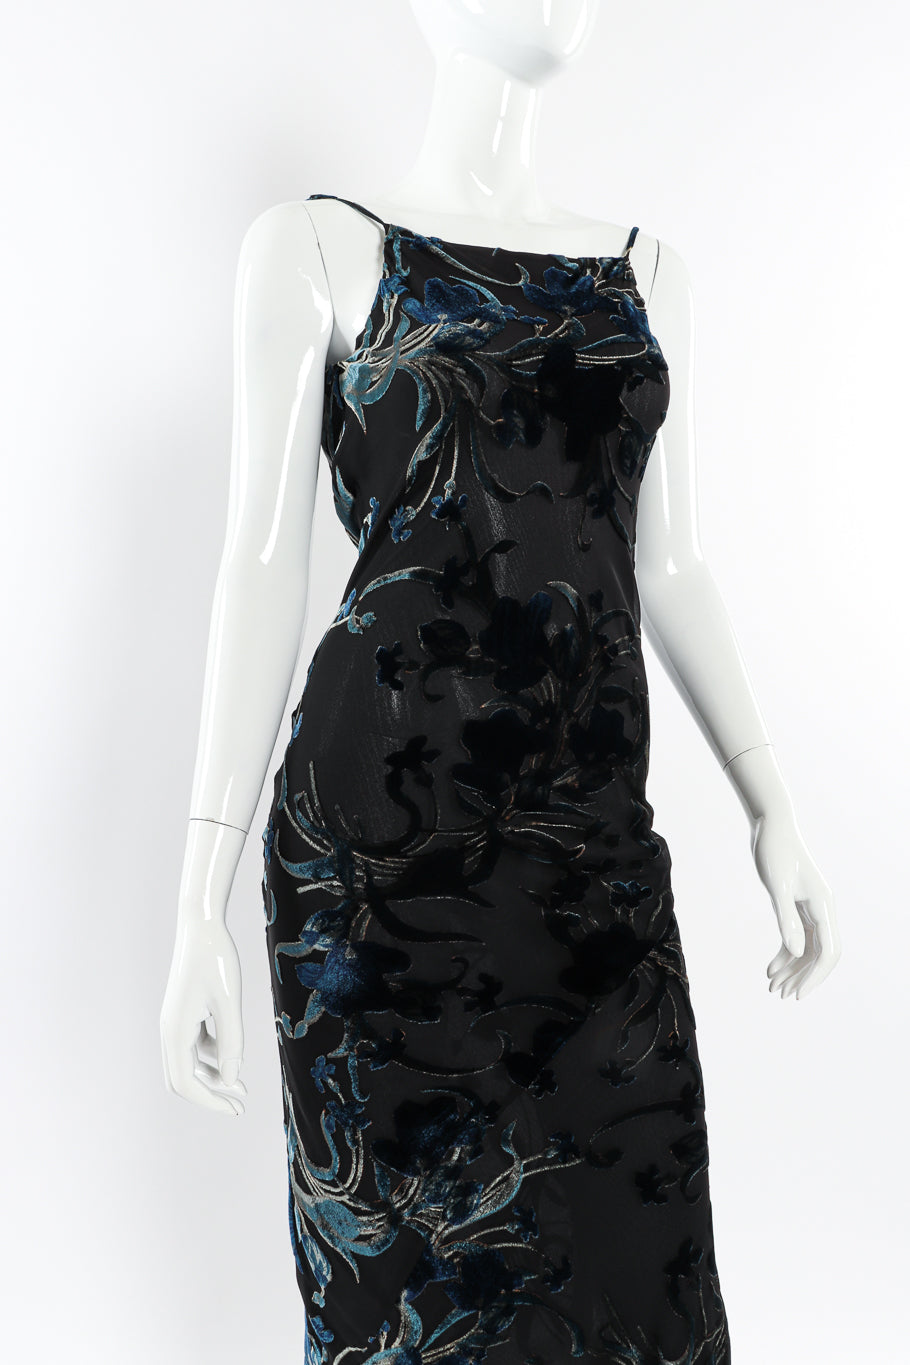 Velvet burnout slip dress by Richard Tyler on mannequin front close up @recessla